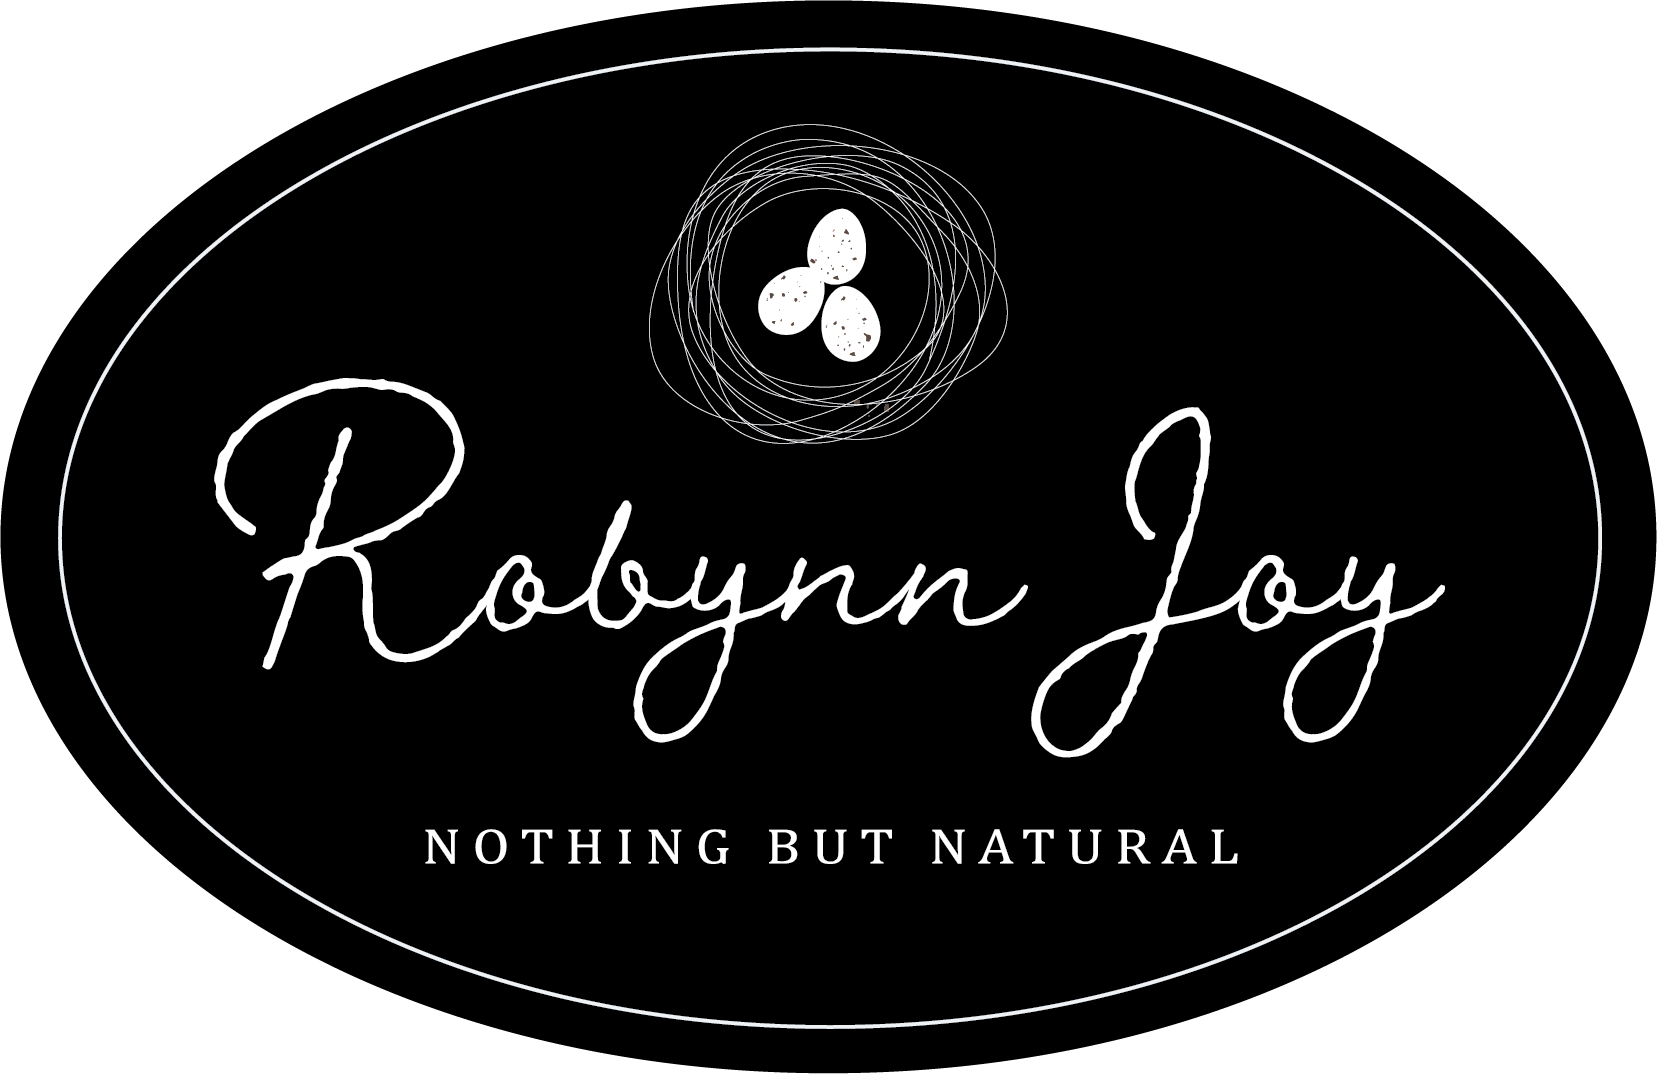 The Robynn Joy Company